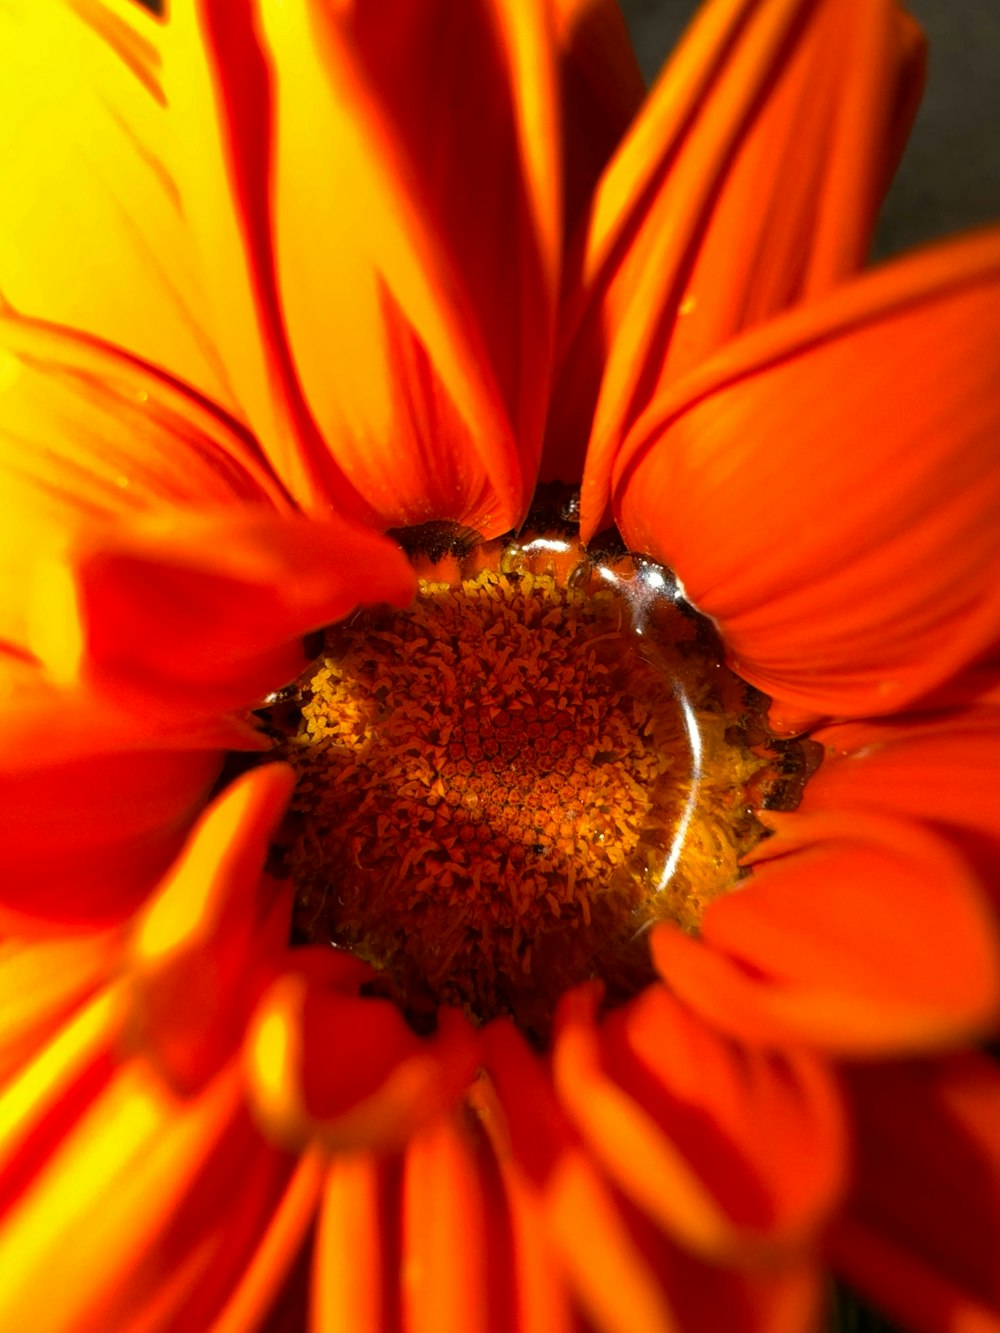 a close up of a bright orange flower